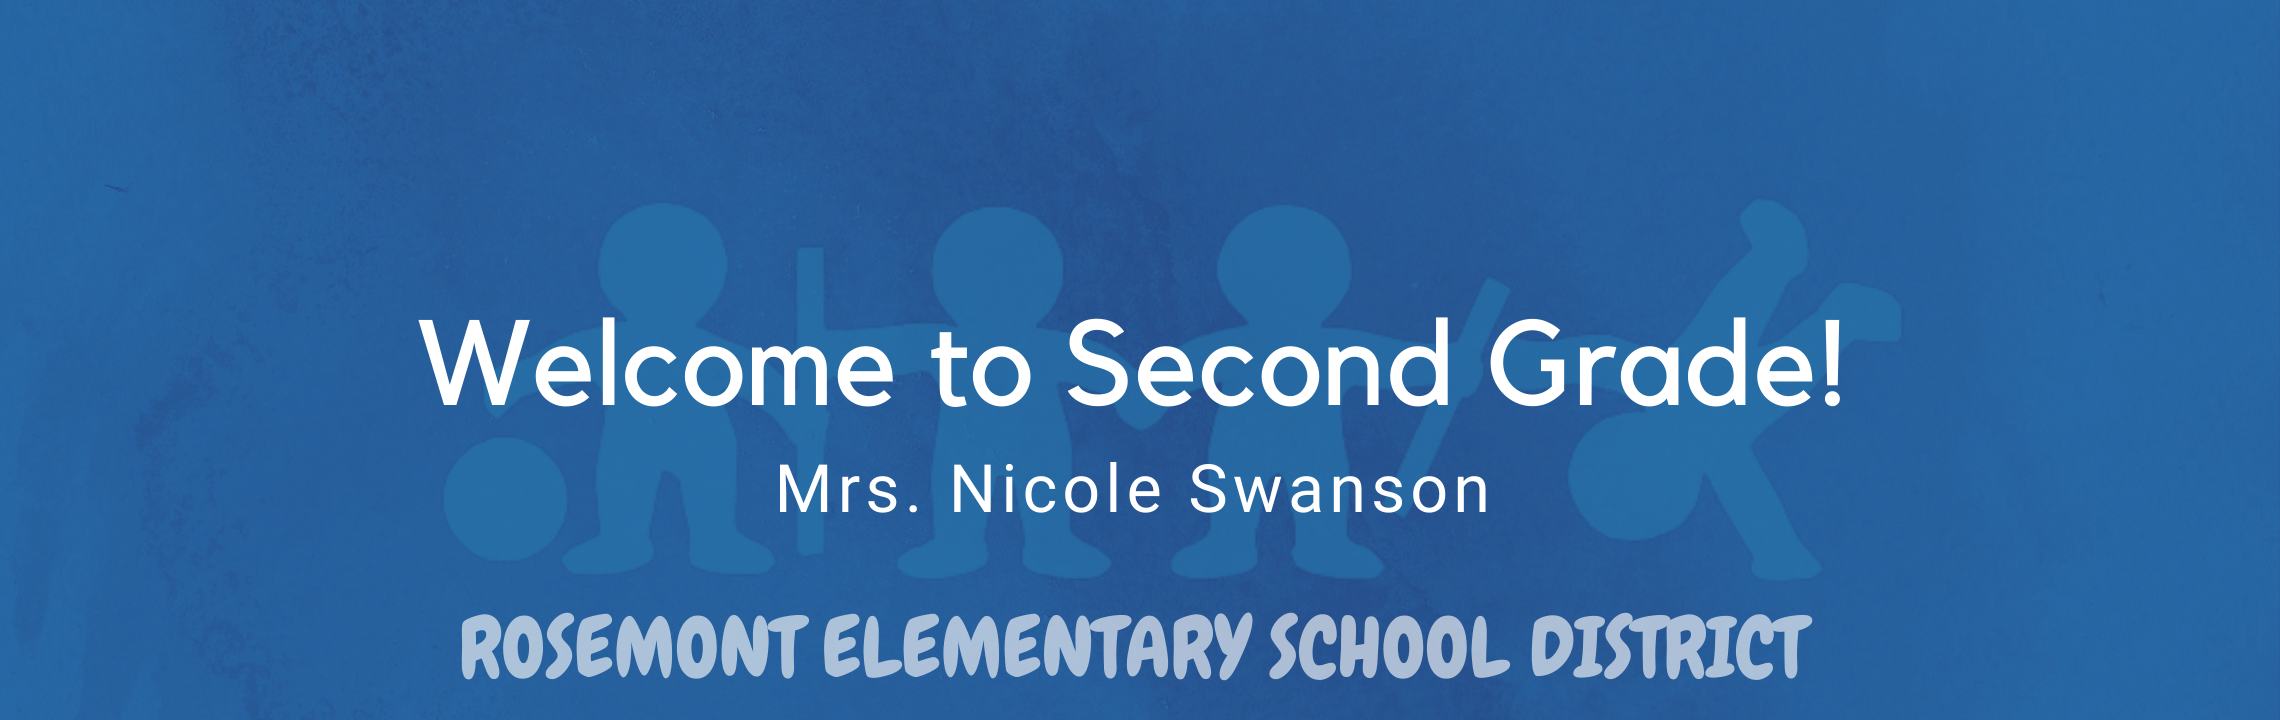 Welcome to Second Grade , Mrs. Nicole Swanson, Rosemont Elementary Schools 